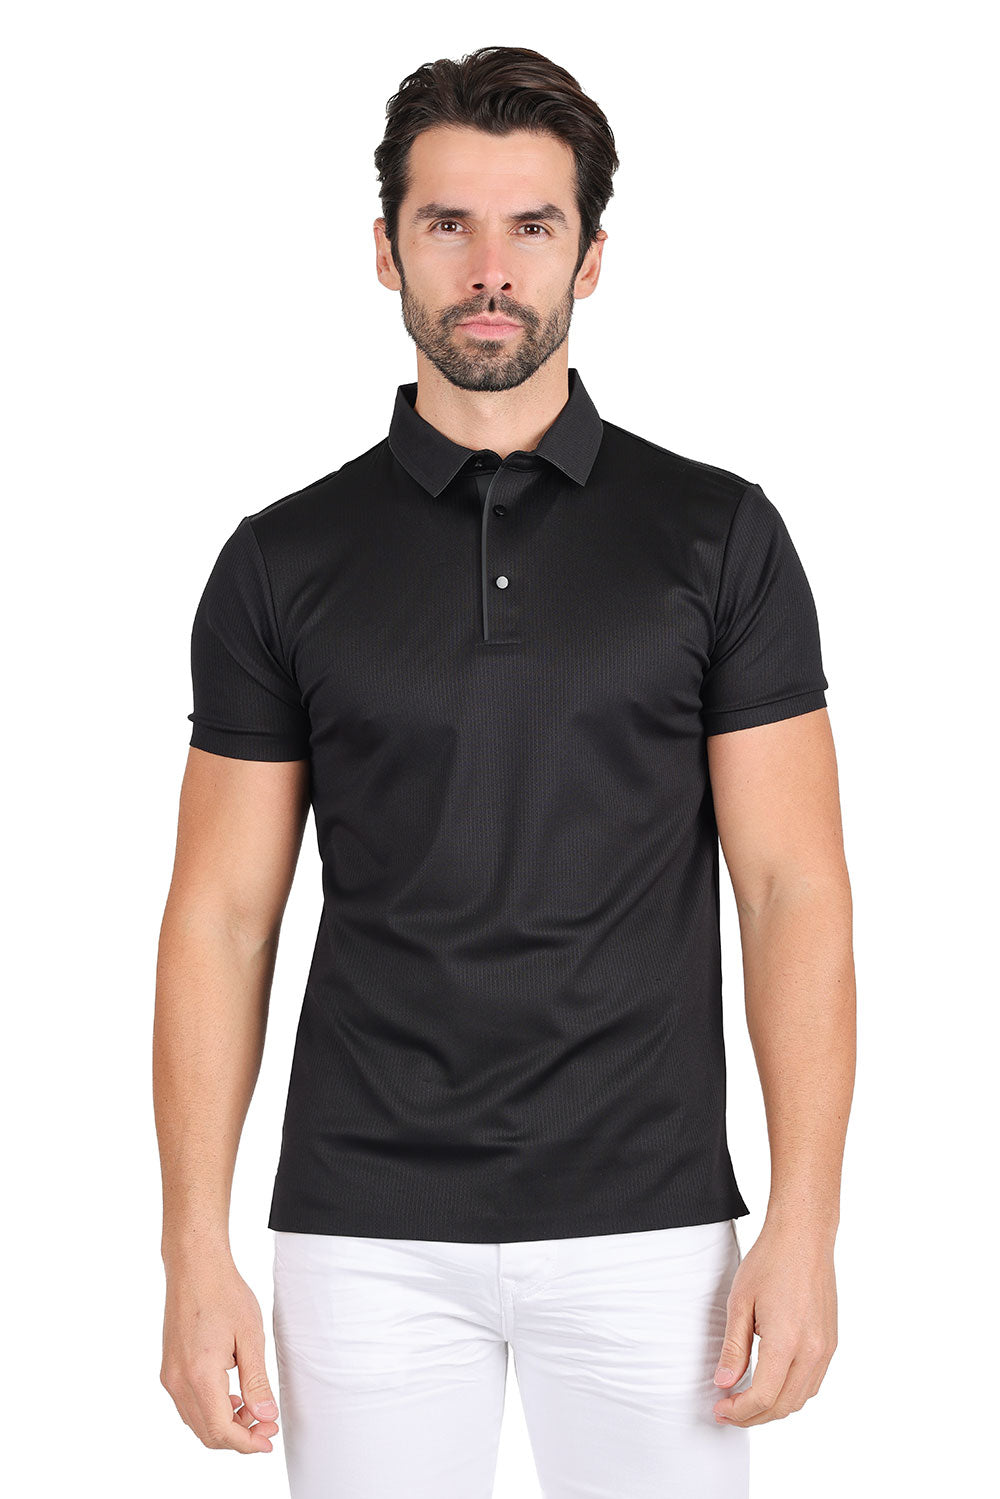 Barabas Men's Soft Silky Cotton Blend Short Sleeve Polo Shirt 2PP829